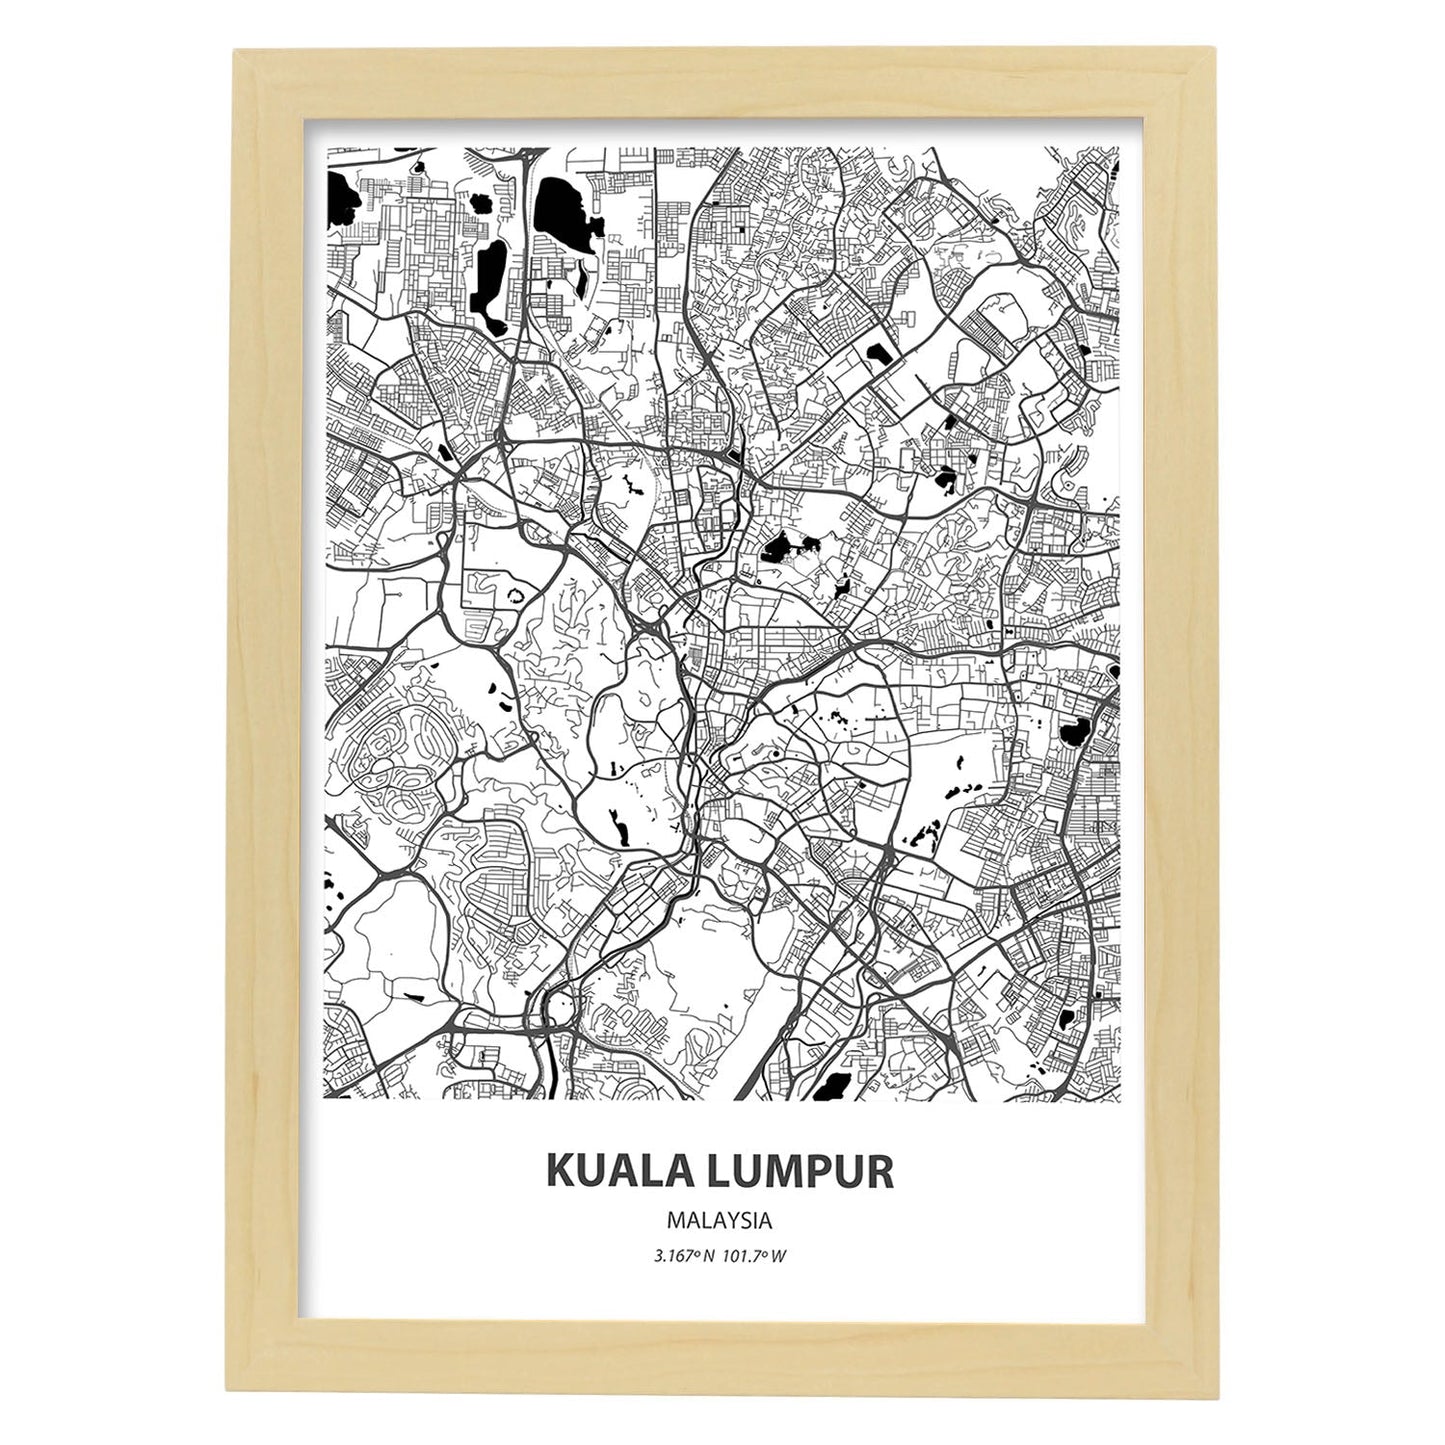 Poster con mapa de Kuala Lumpur - Malasia. Láminas de ciudades de Asia con mares y ríos en color negro.-Artwork-Nacnic-A4-Marco Madera clara-Nacnic Estudio SL